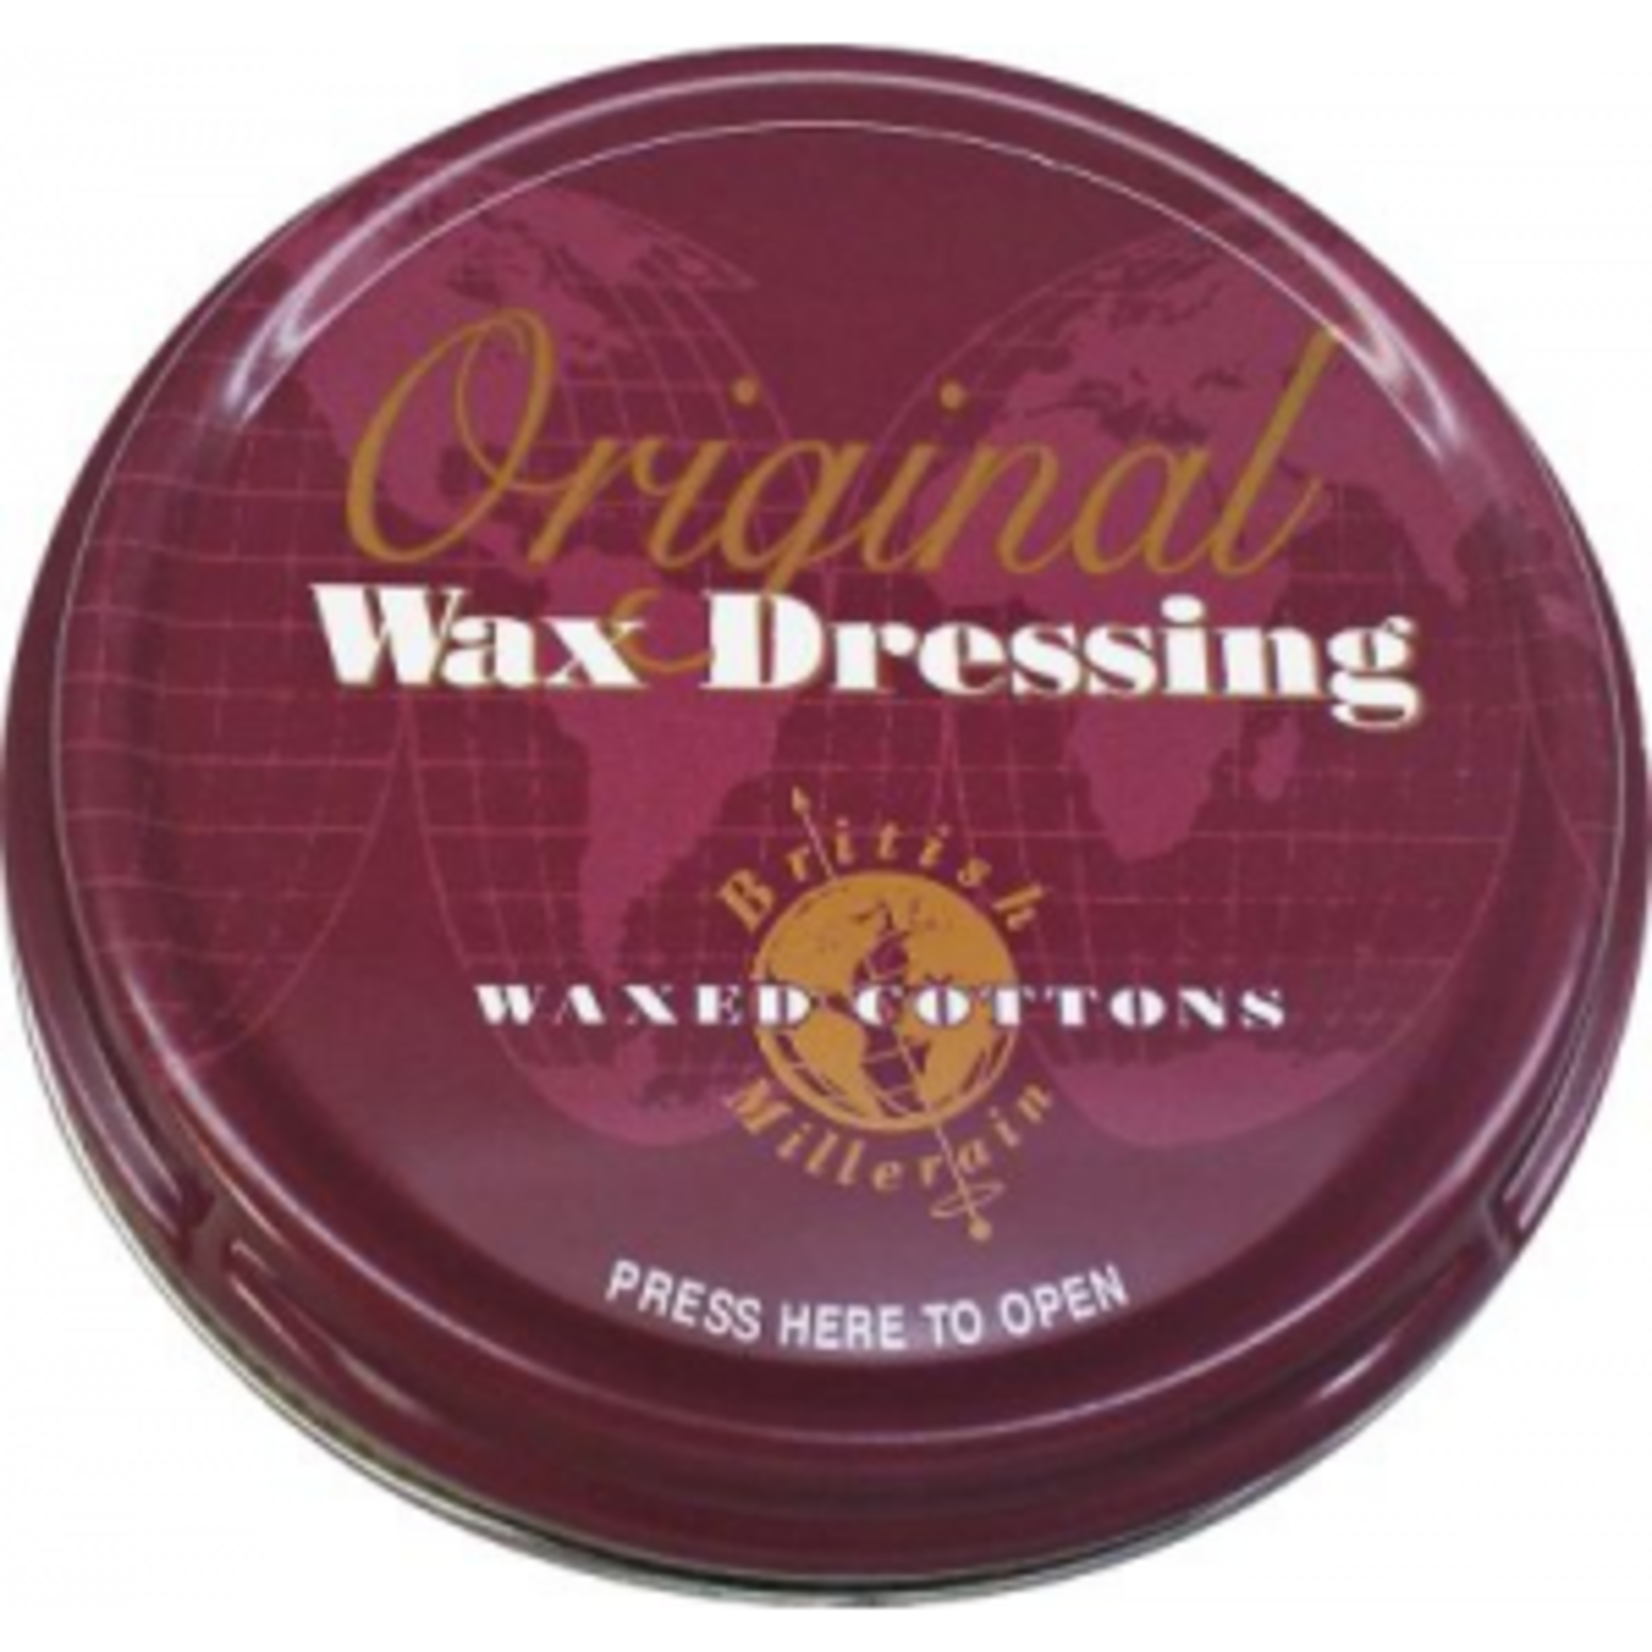 Waxed Cottons Original Wax Dressing